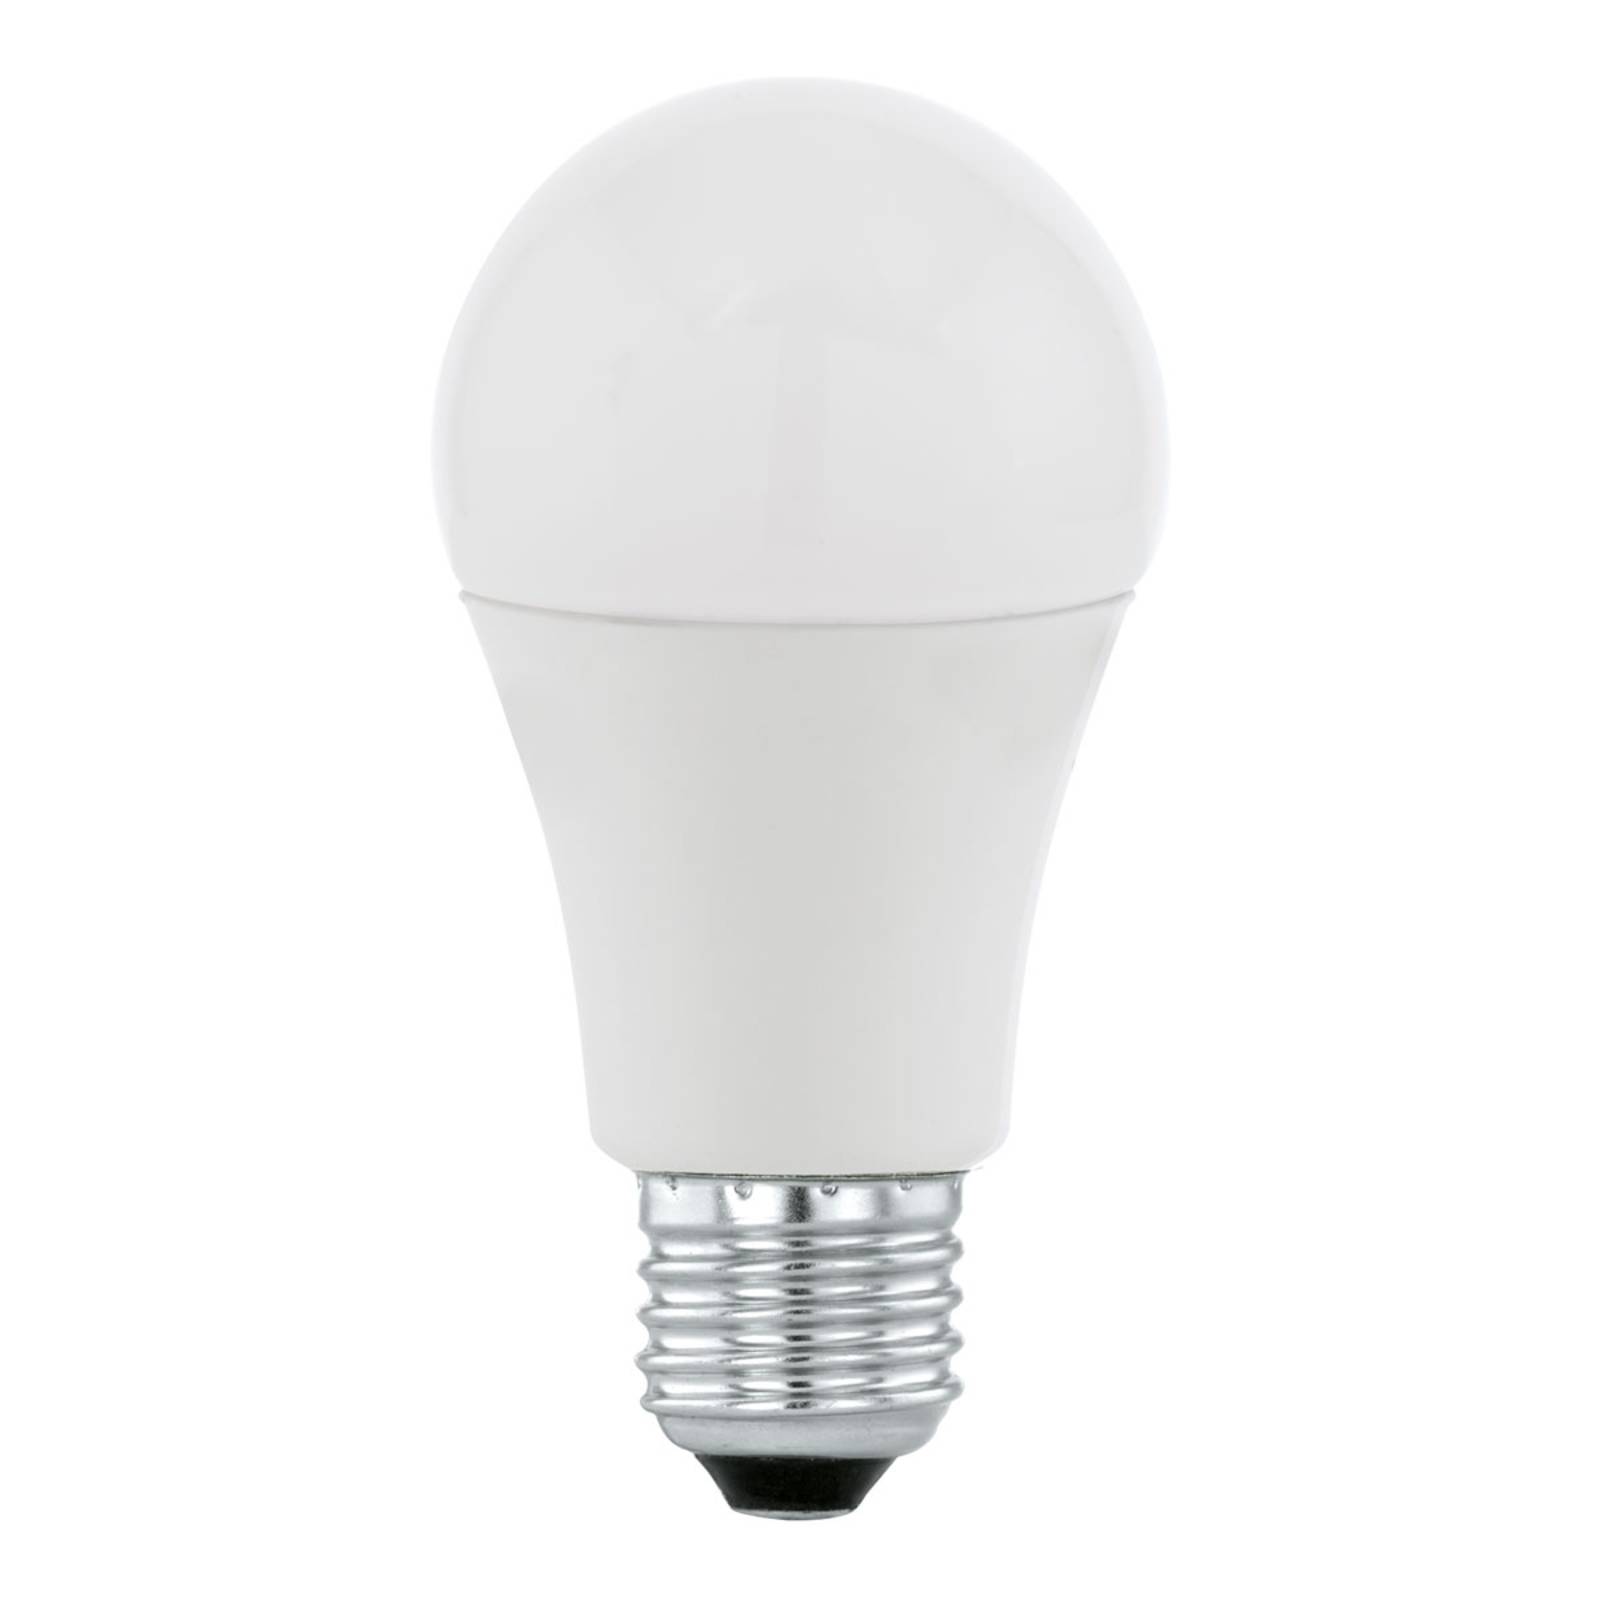 EGLO LED-Lampe E27 A60 9W, warmweiß, opal